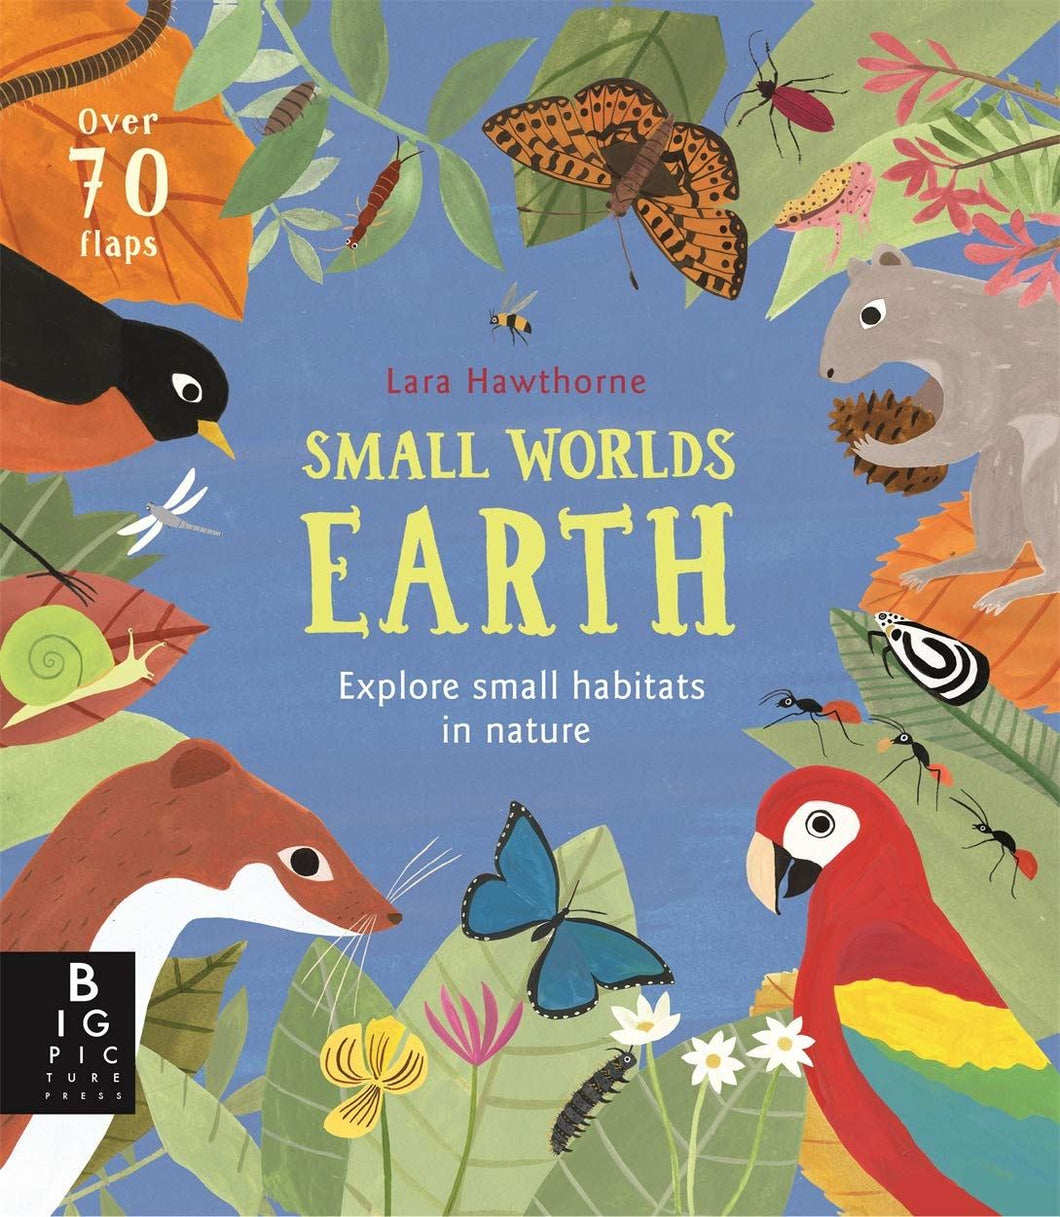 Small Worlds: Earth by Camilla De La Bedoyere & Lara Hawthorne